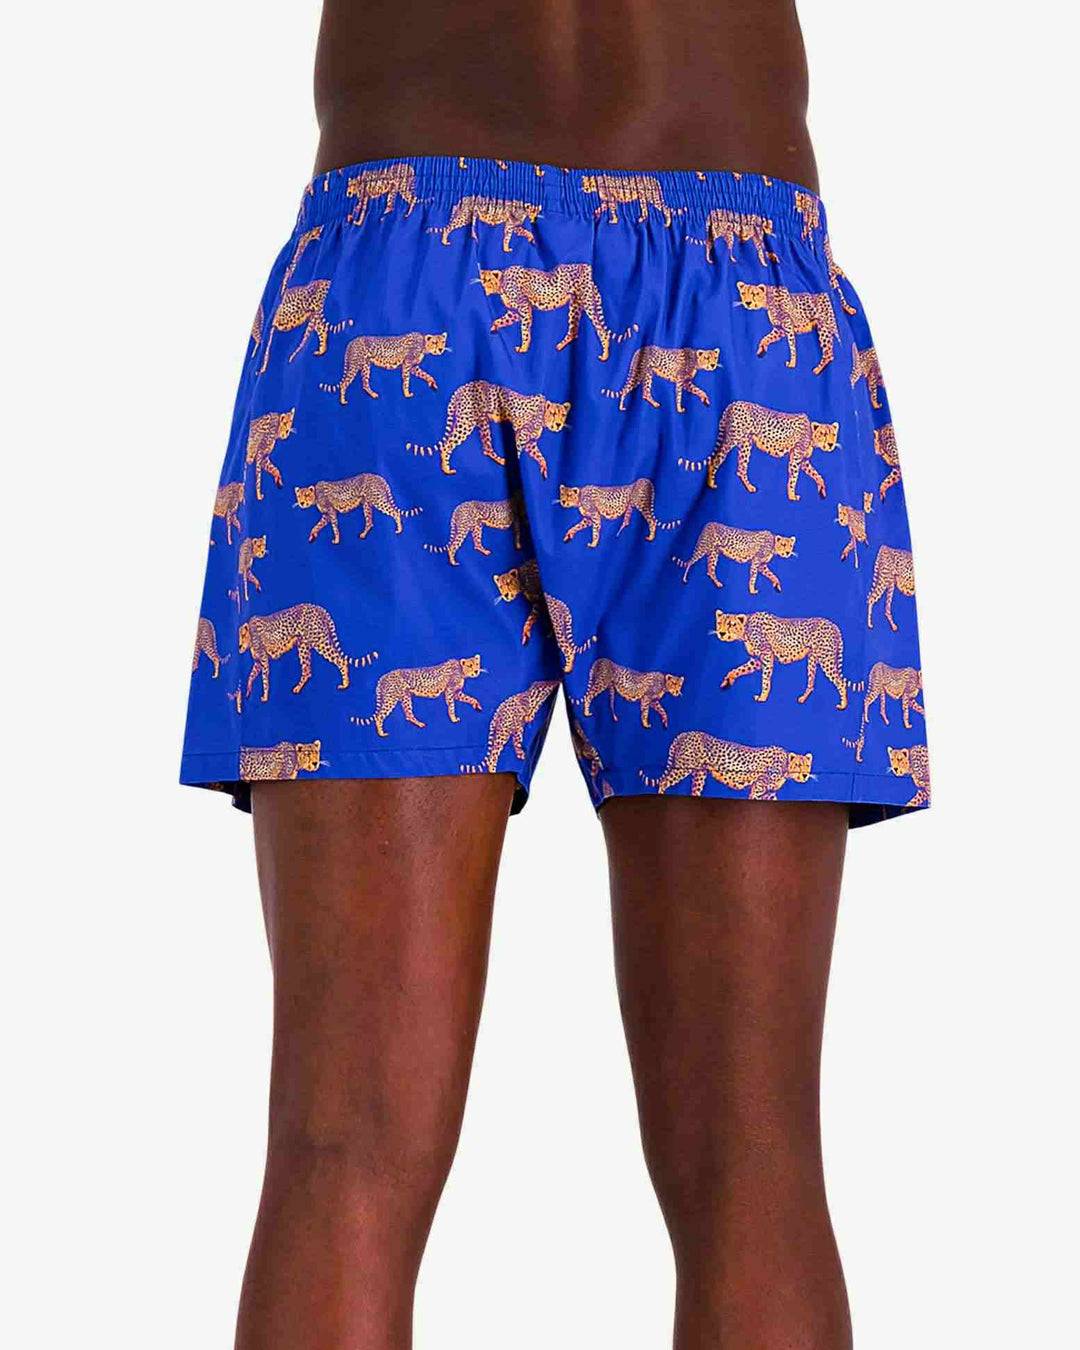 Mens boxer shorts - Electric blue Cheetahs